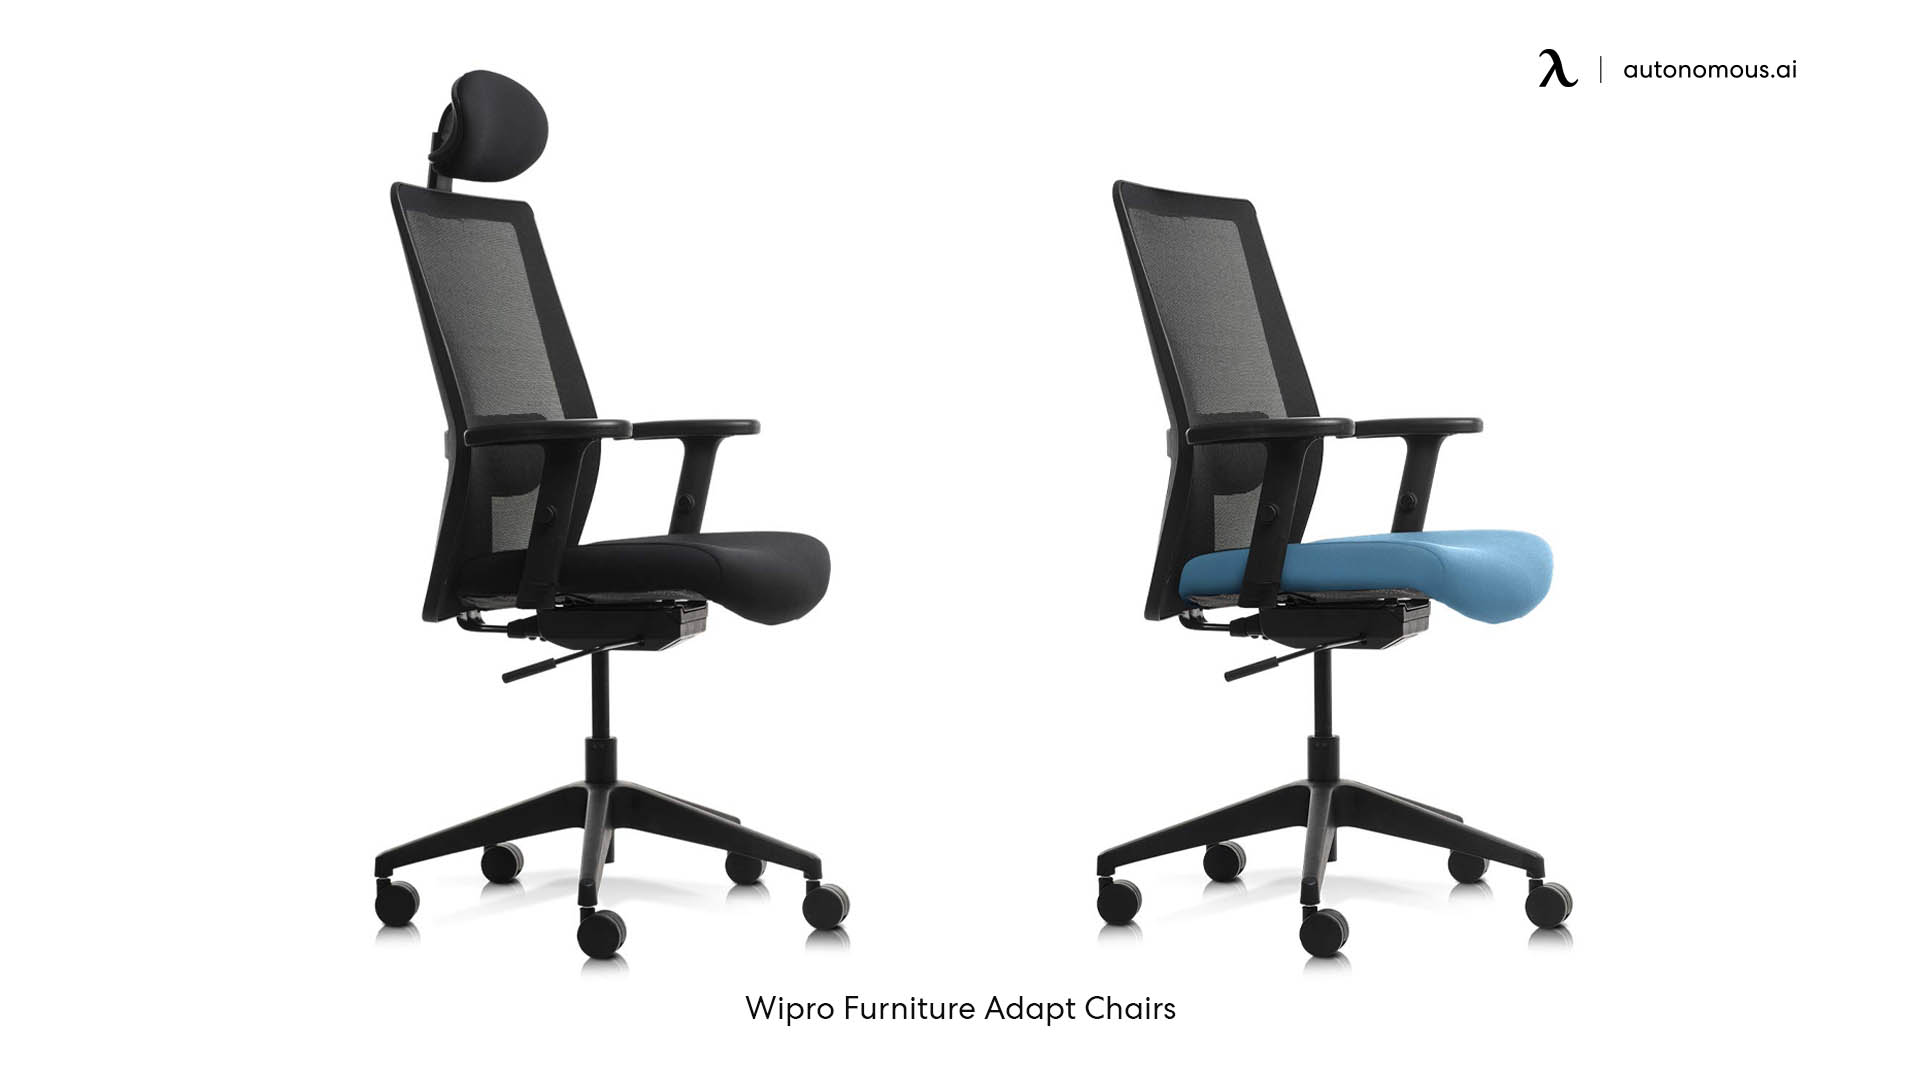 Wipro Furniture Adapt Chairs